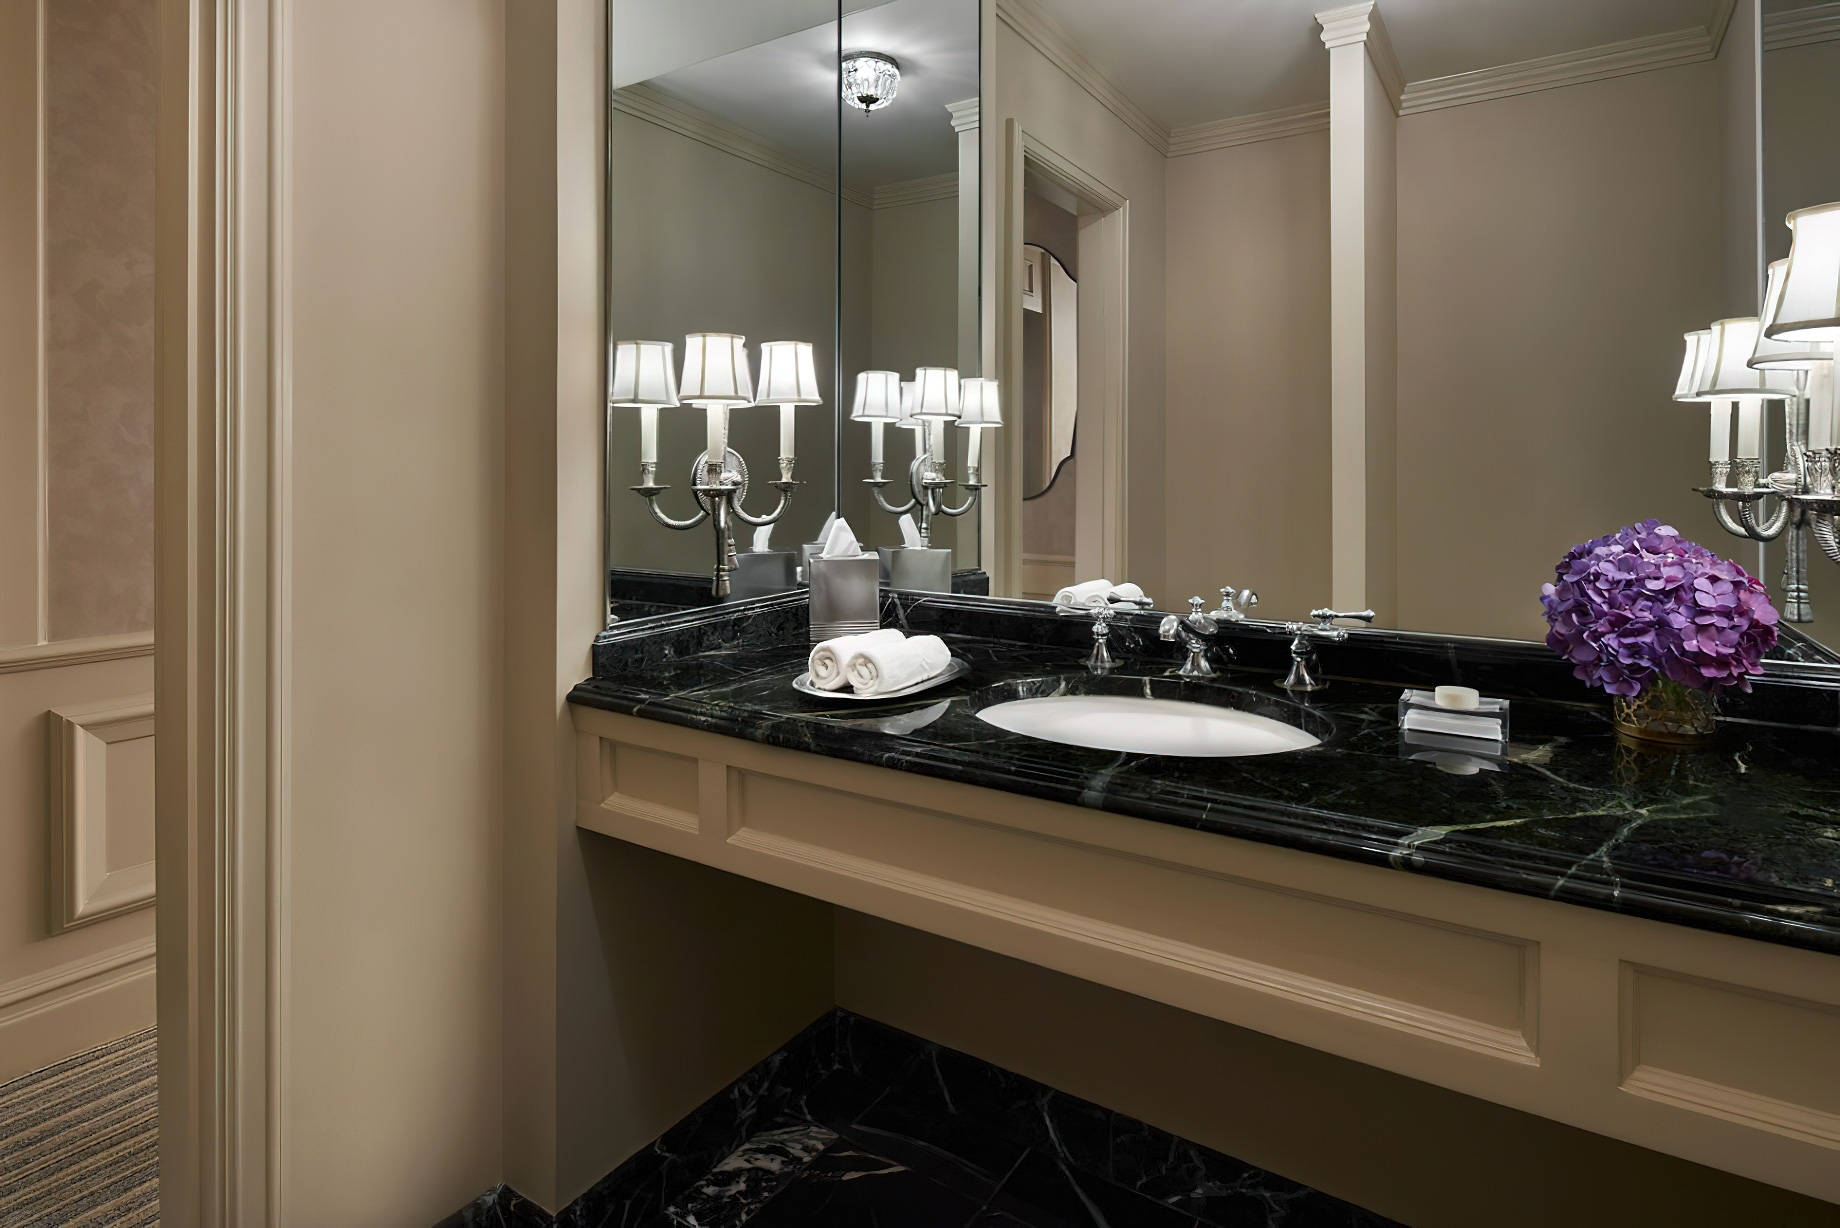 The Ritz-Carlton, Pentagon City Hotel – Arlington, VA, USA – Ritz-Carlton Suite Bathroom Vanity